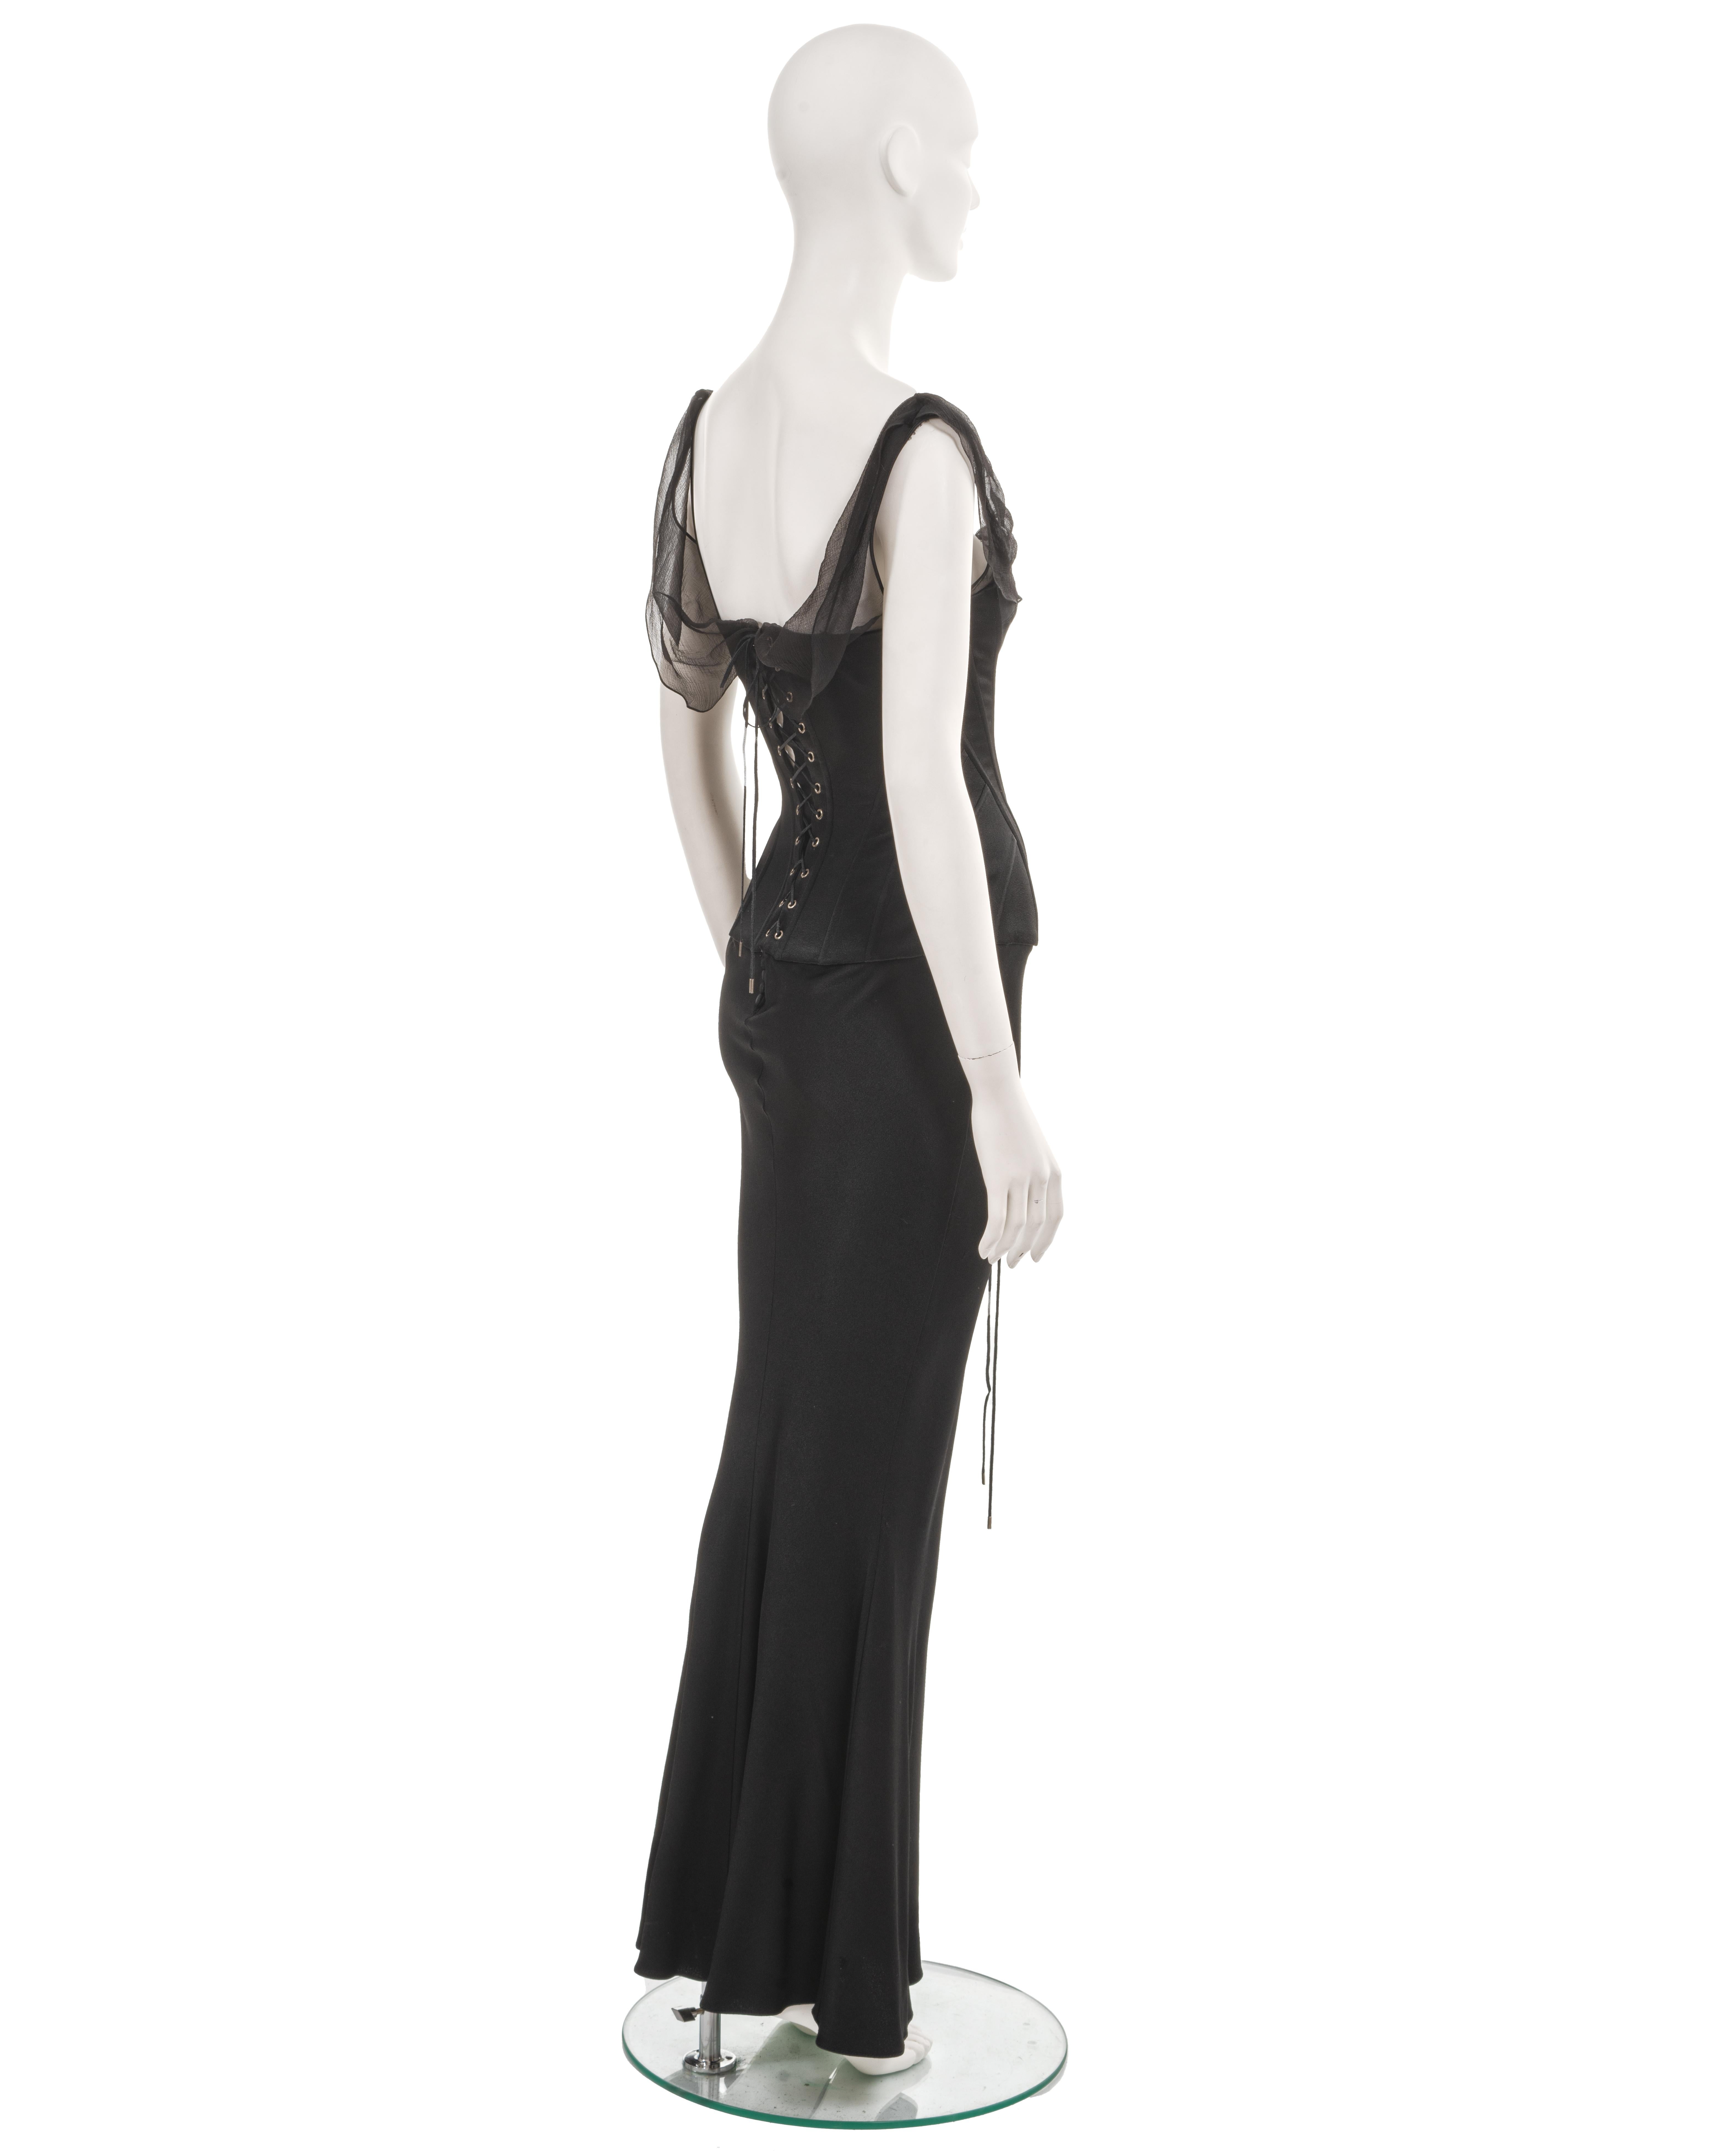 Women's John Galliano black satin evening dress with integrated corset, ss 2003